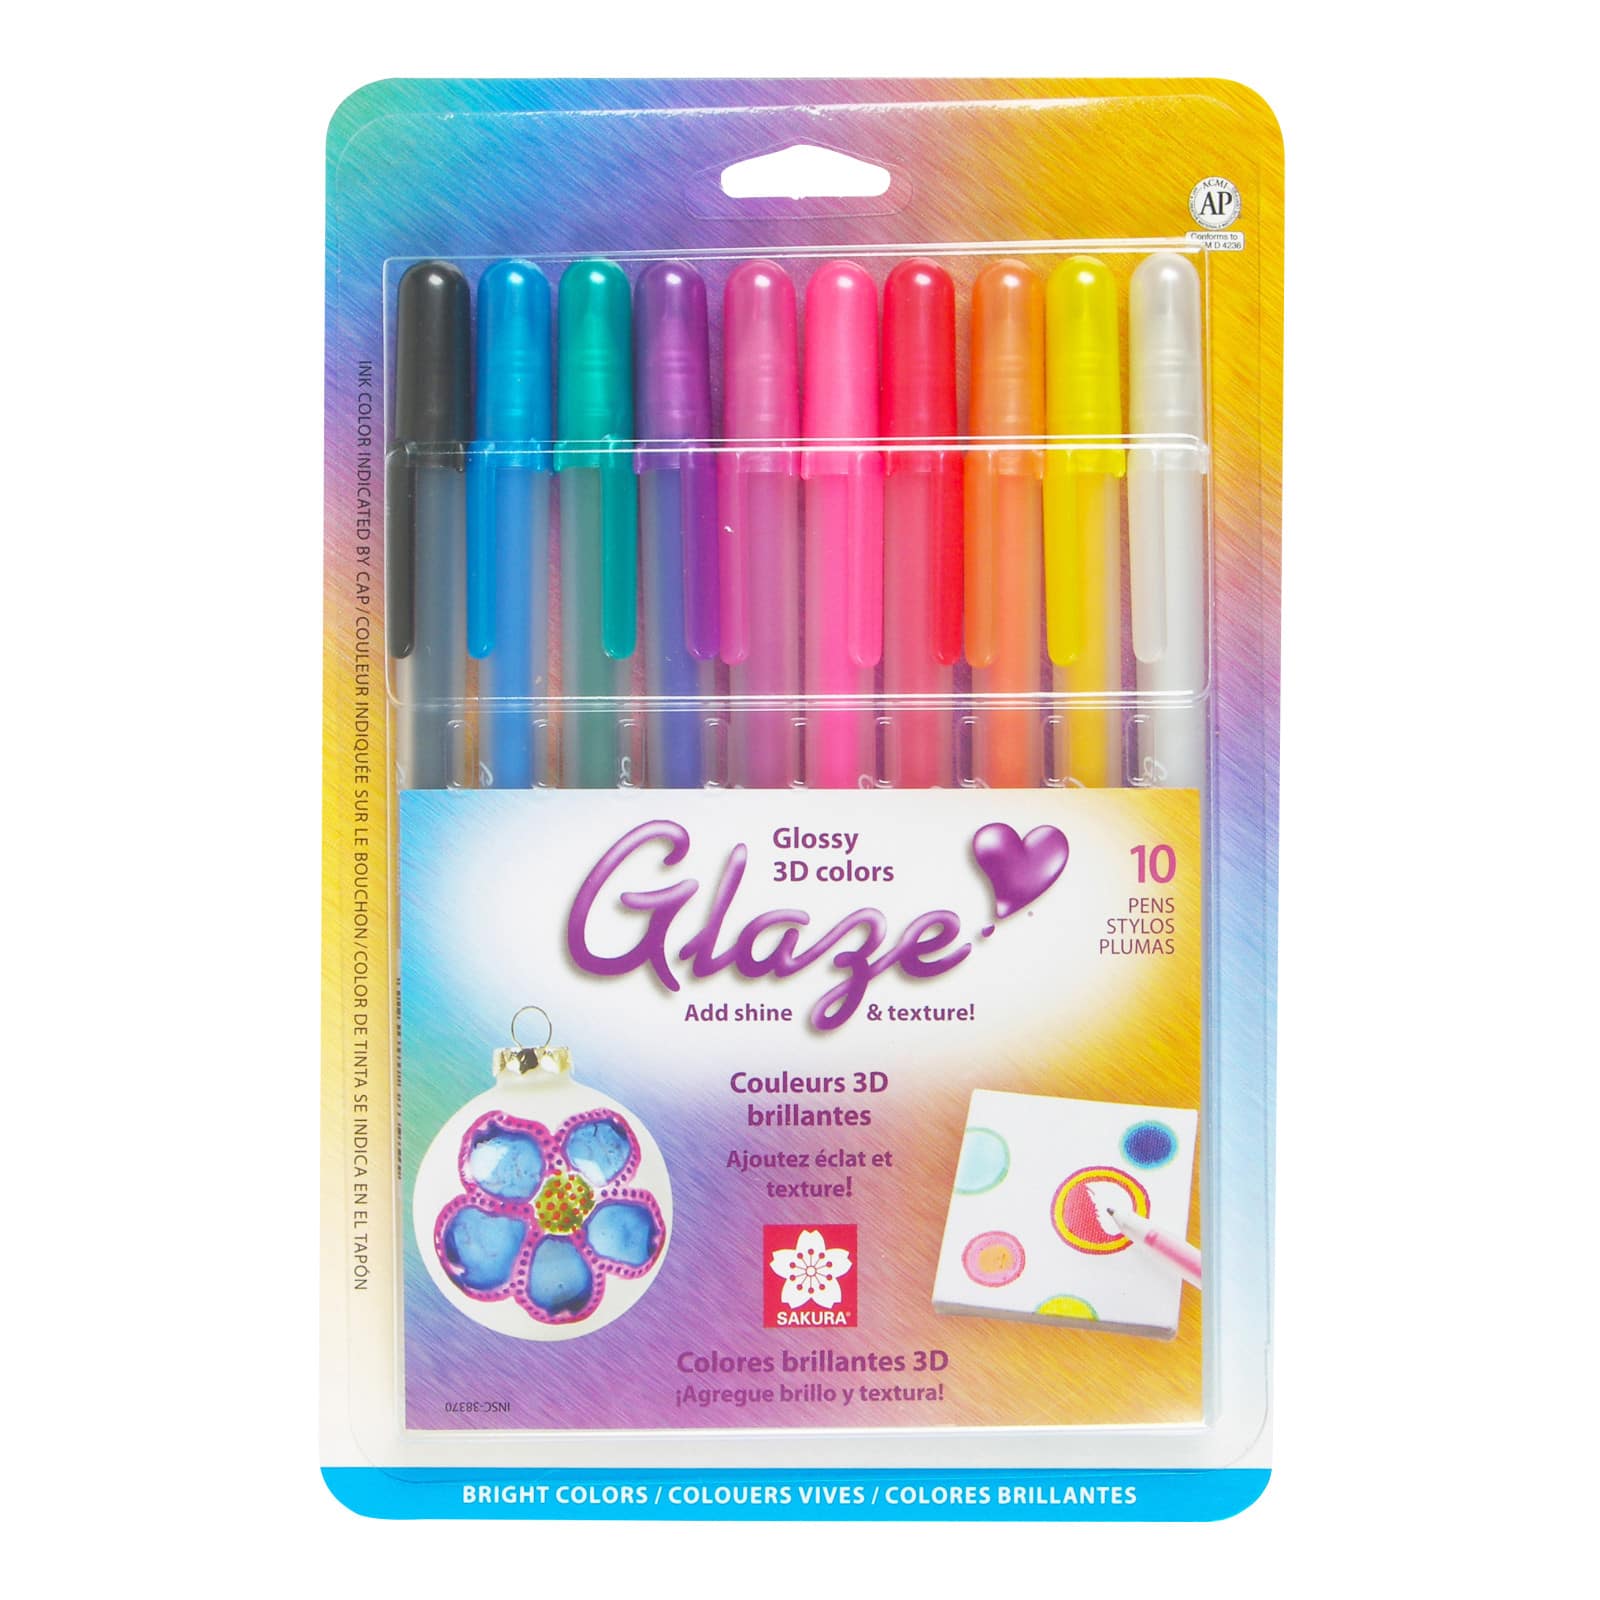 Custom Logo Ten Color Pens